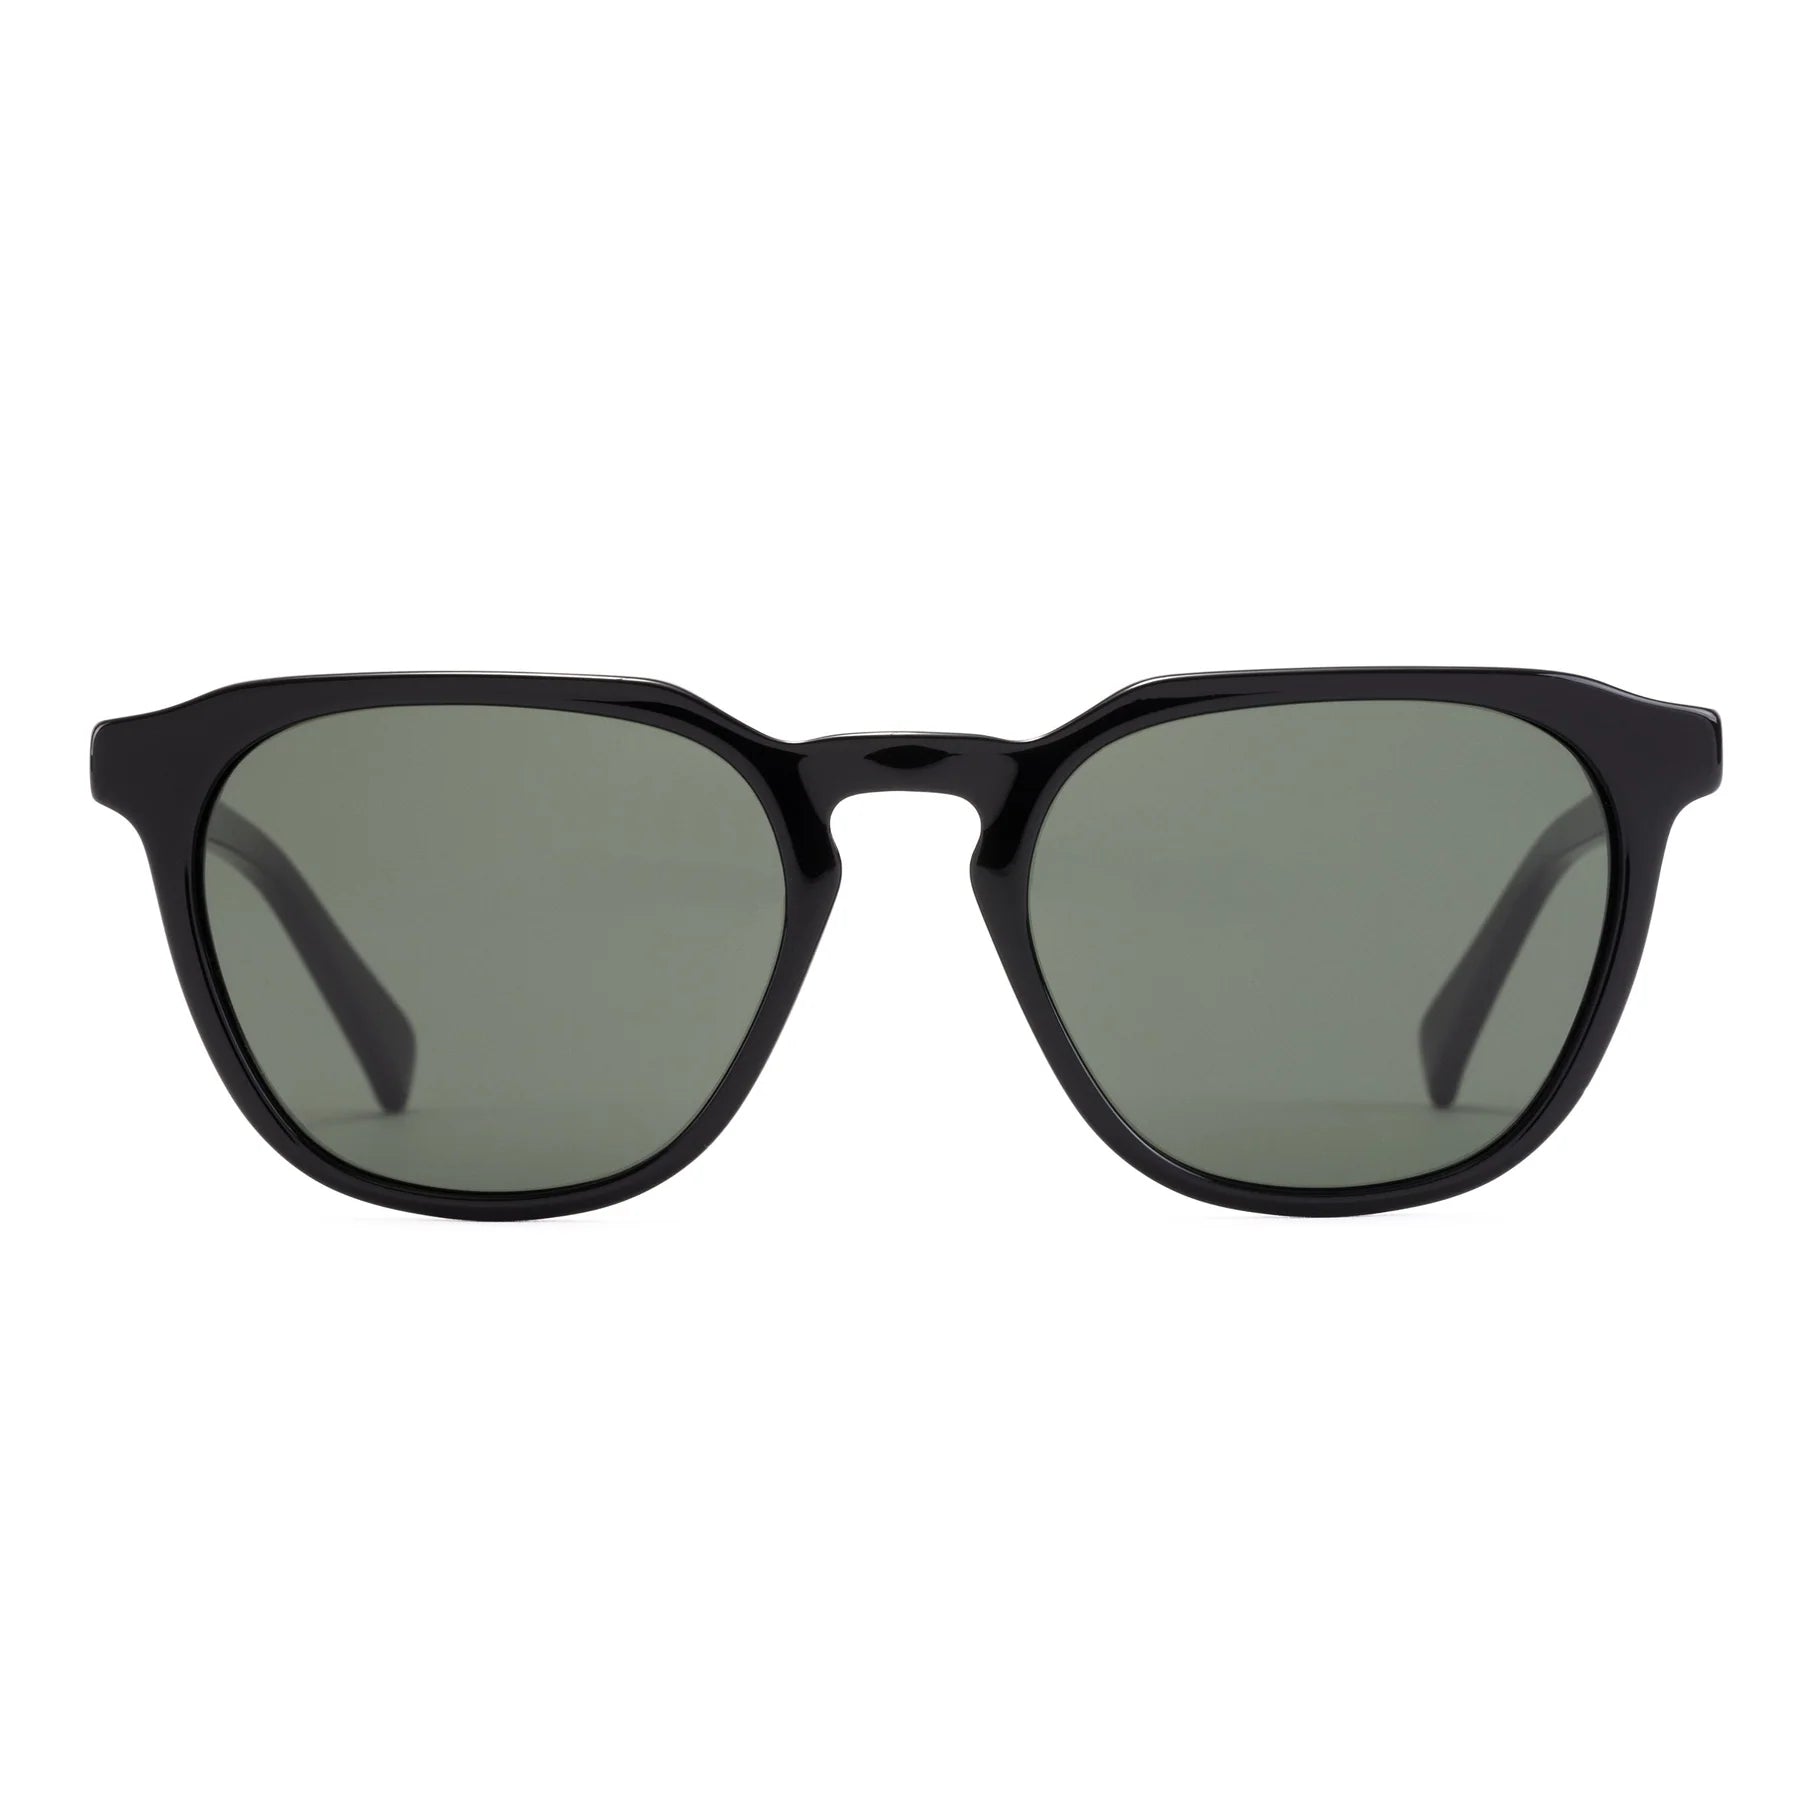 DIVIDE - ECO BLACK / GREY POLAR - Board Store Otis EyewearSunglasses  